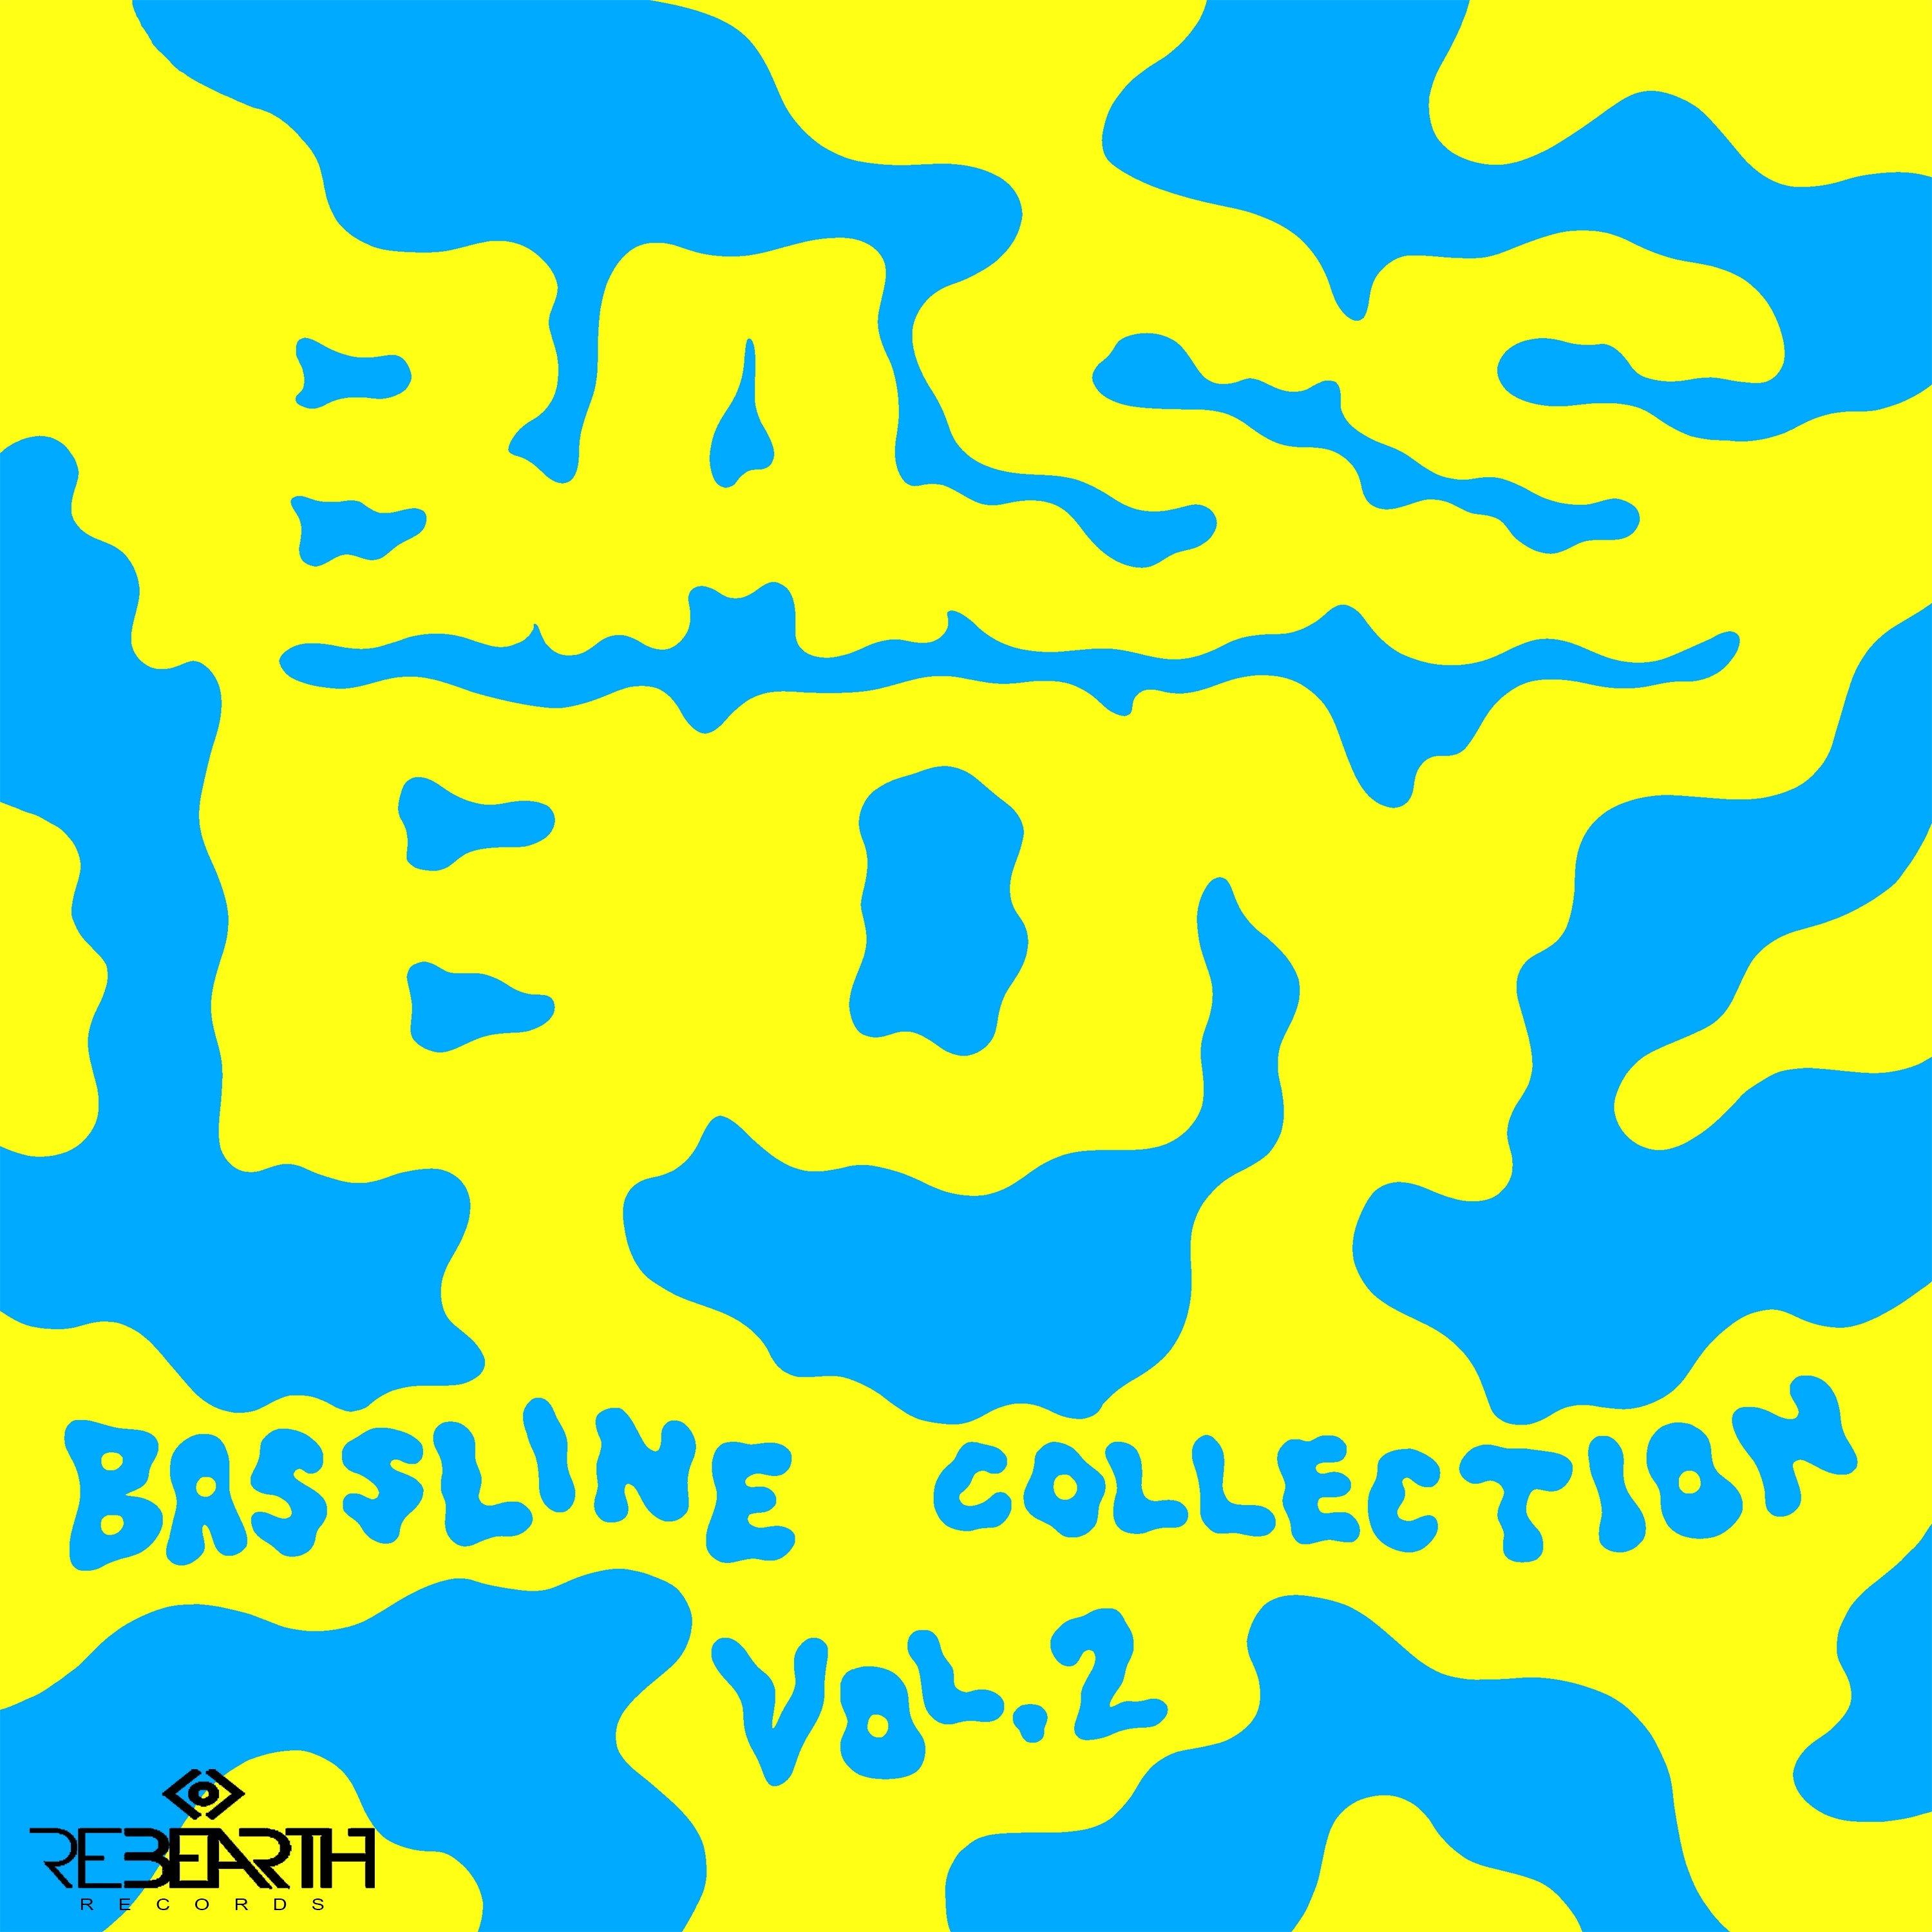 Bassboy - Nightmare (Remix)